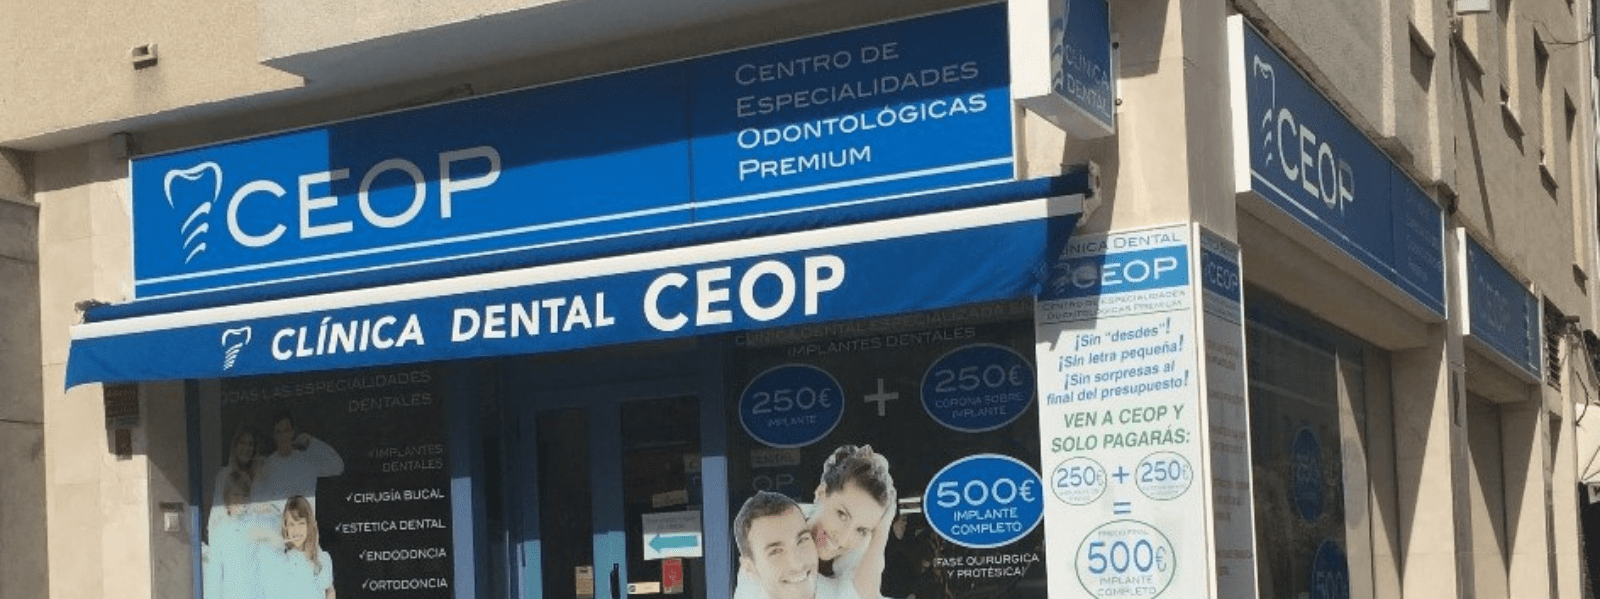 CEOP - Centro de Especialidades Odontológicas Premium banner 5